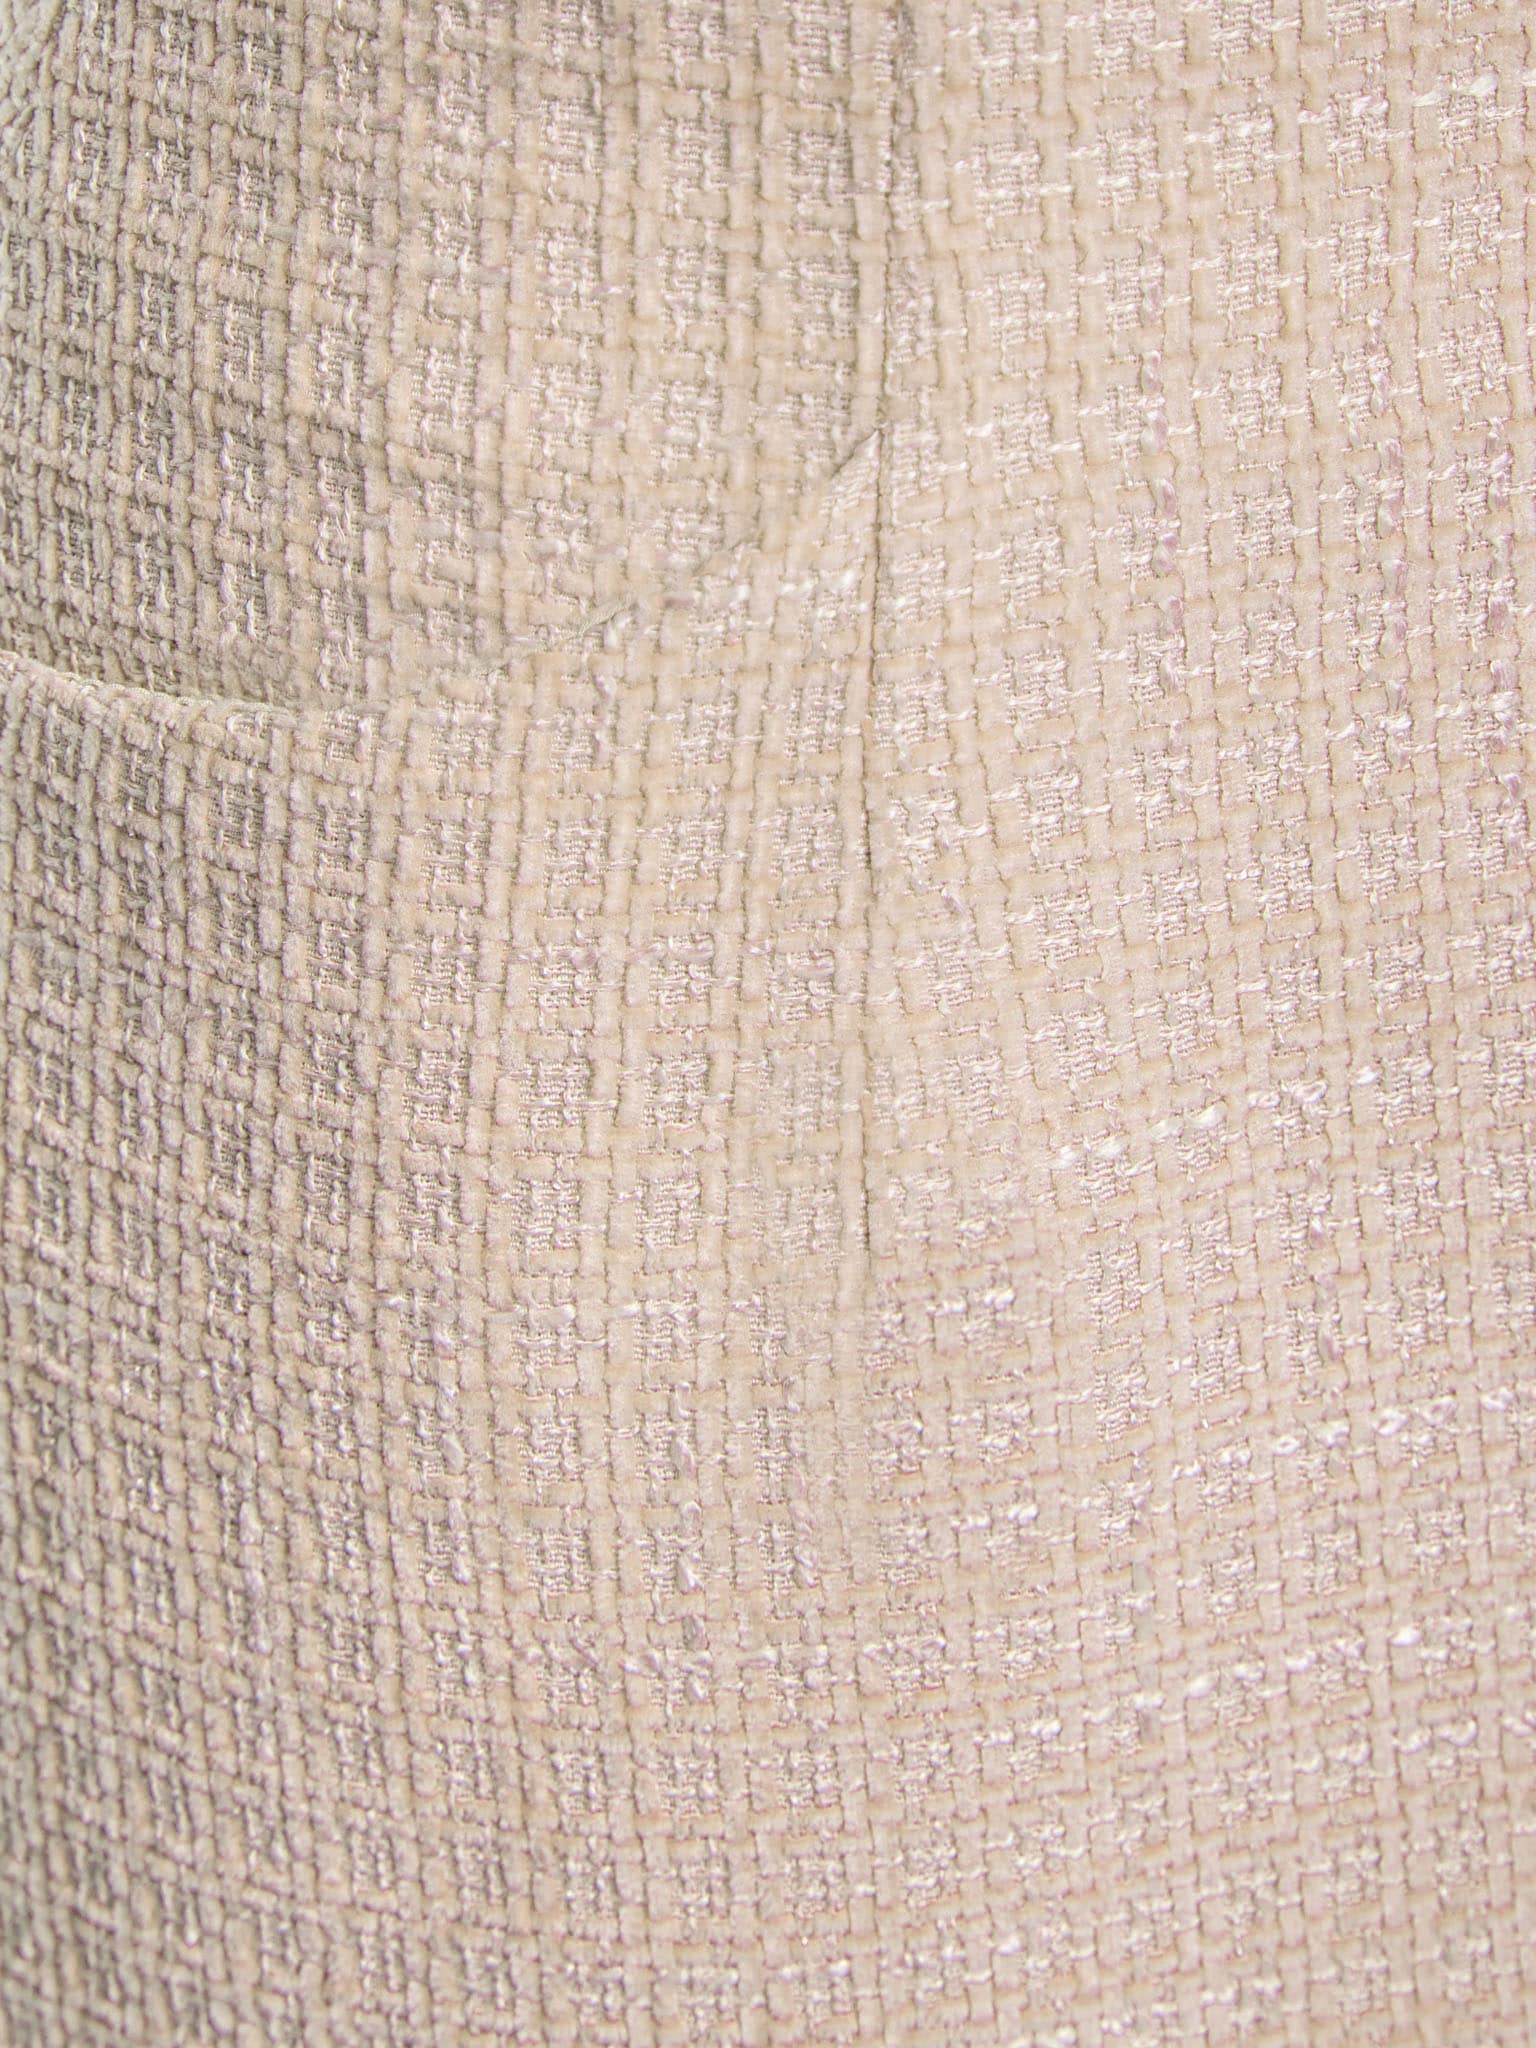 Твидовая юбка мини с карманами